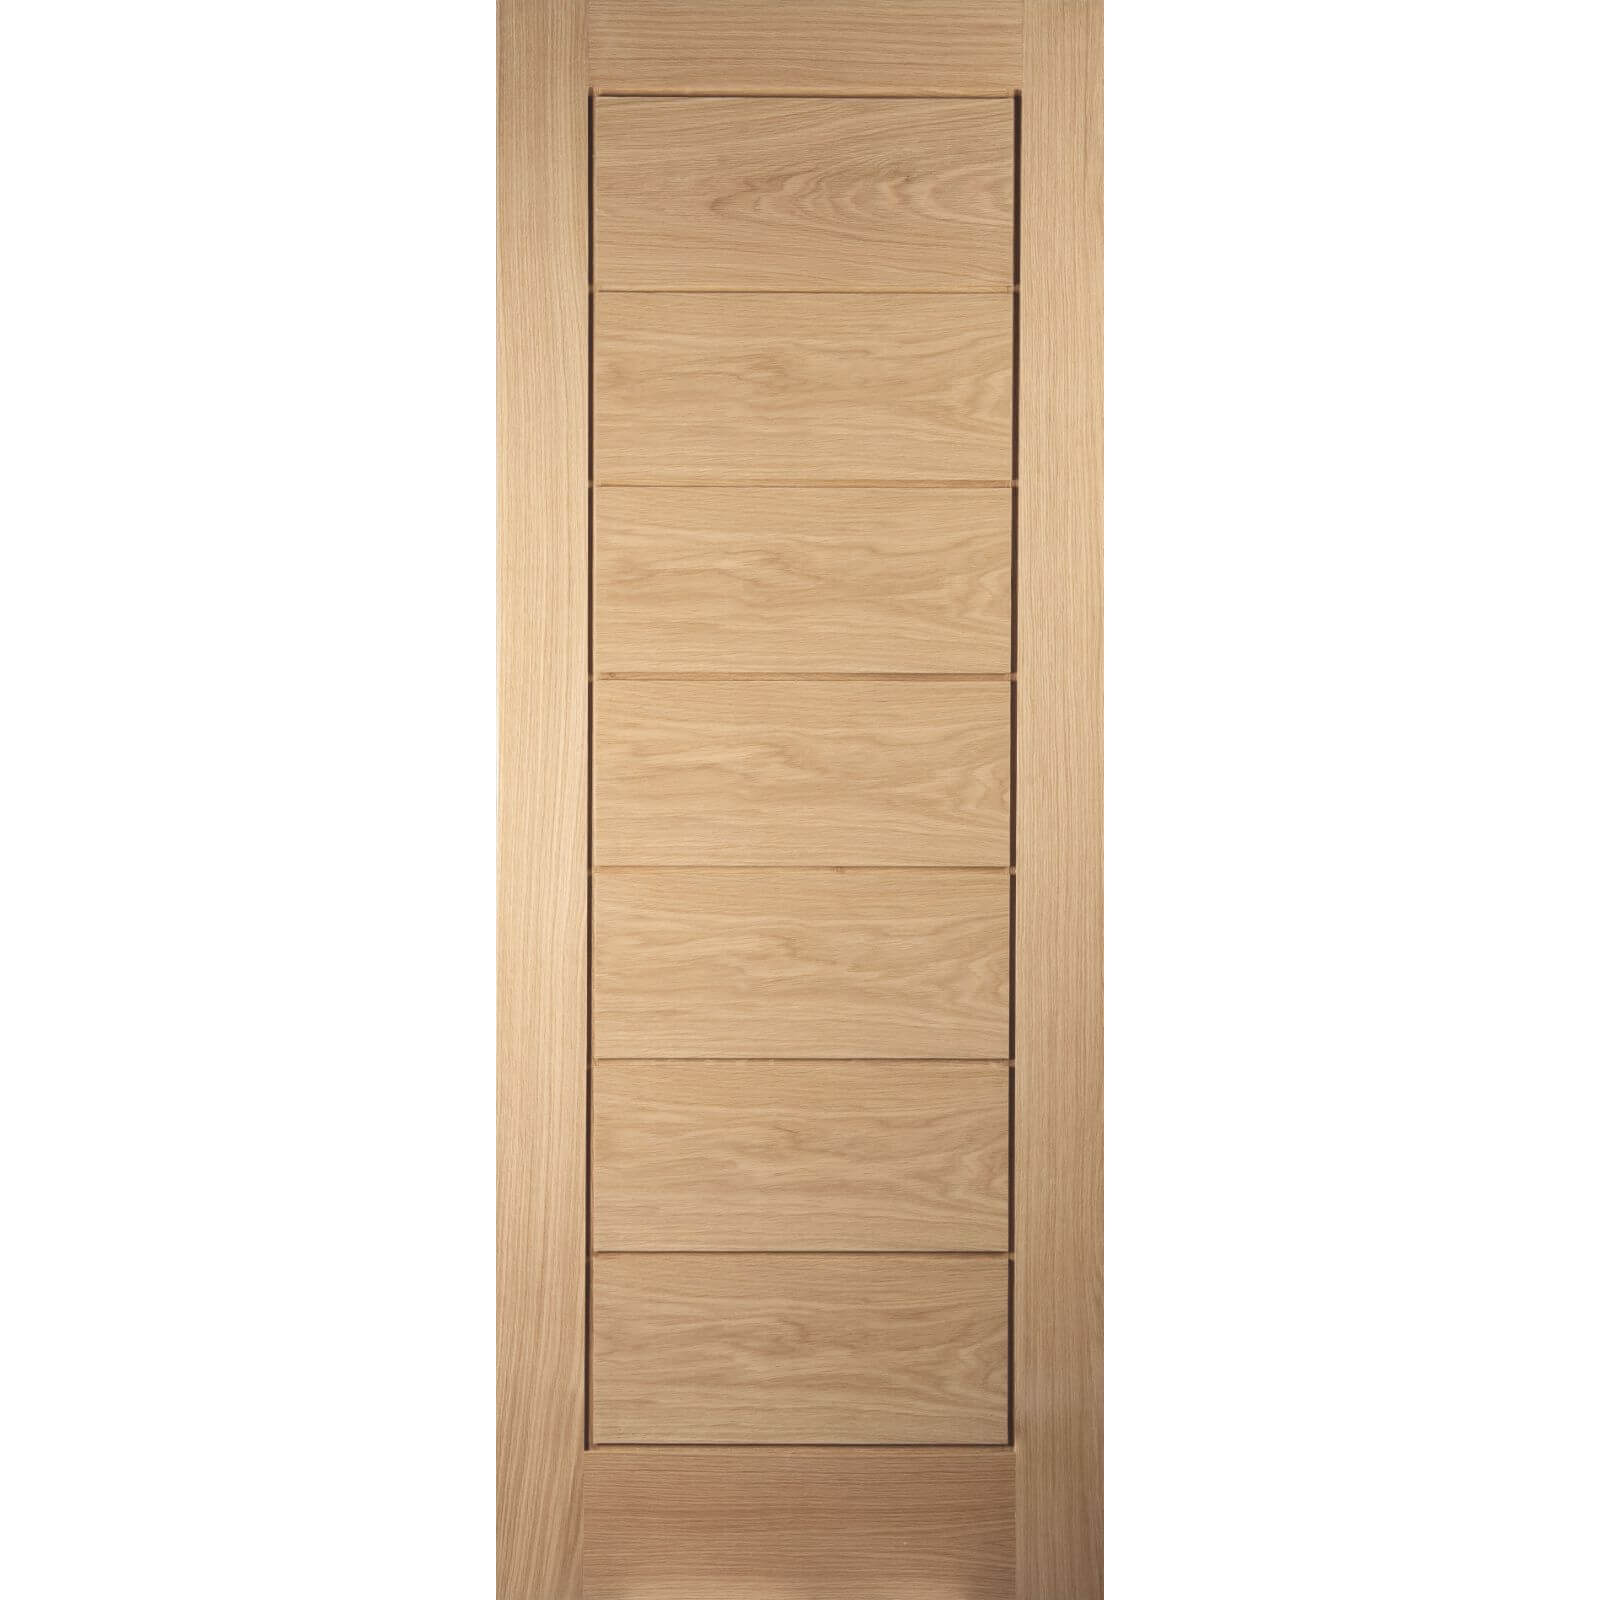 Horizontal White Oak Veneer Internal Door - 762mm Wide